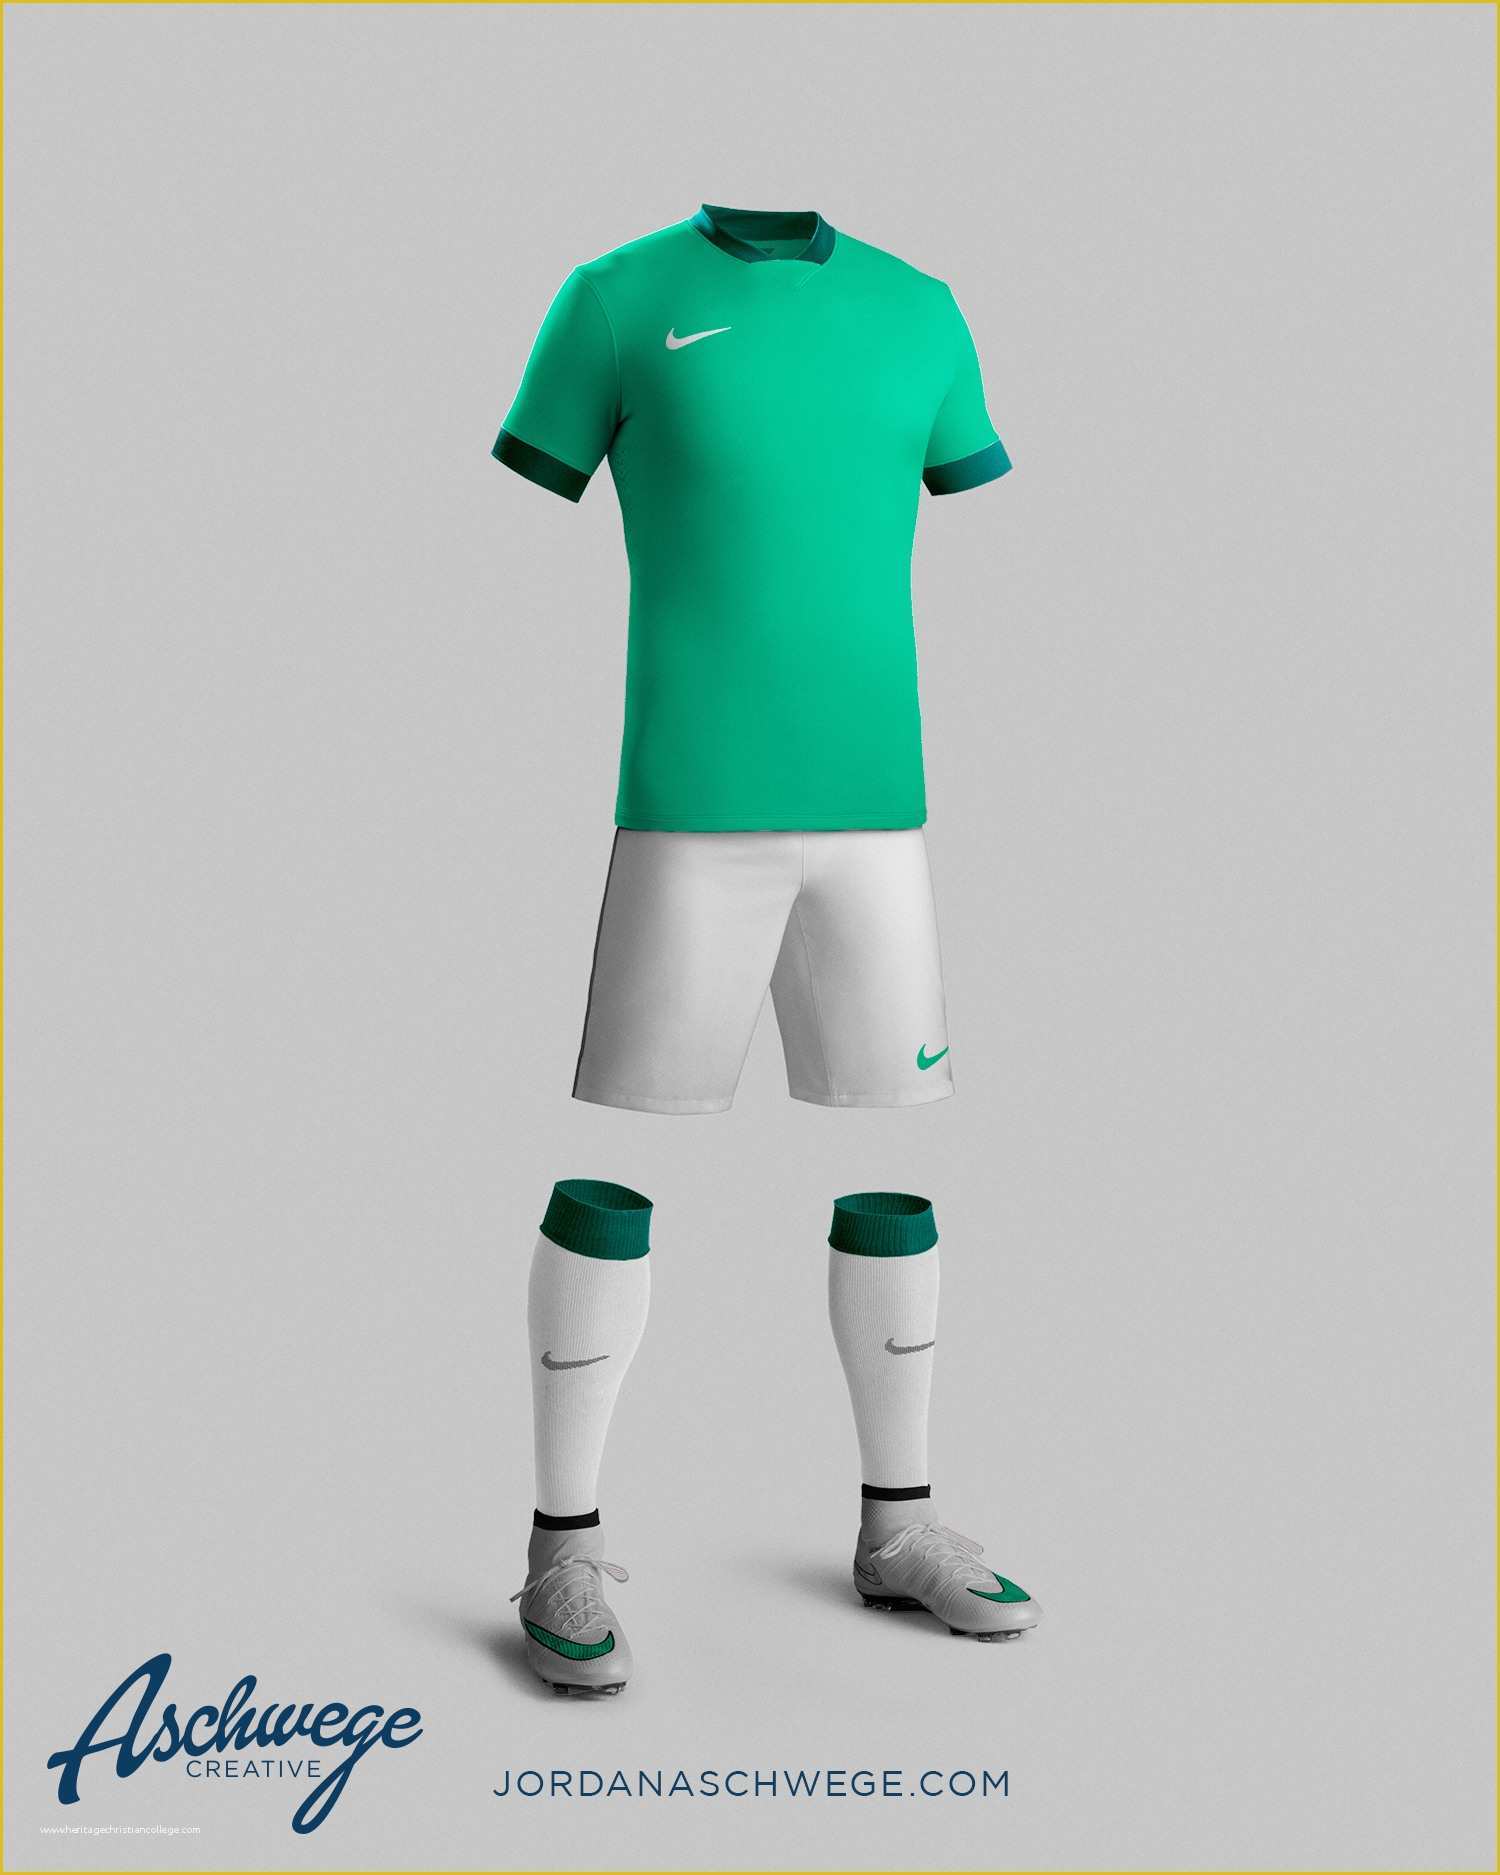 Soccer Jersey Template Psd Free Of Derschwigg S soccer Kit Templates New Collared Version